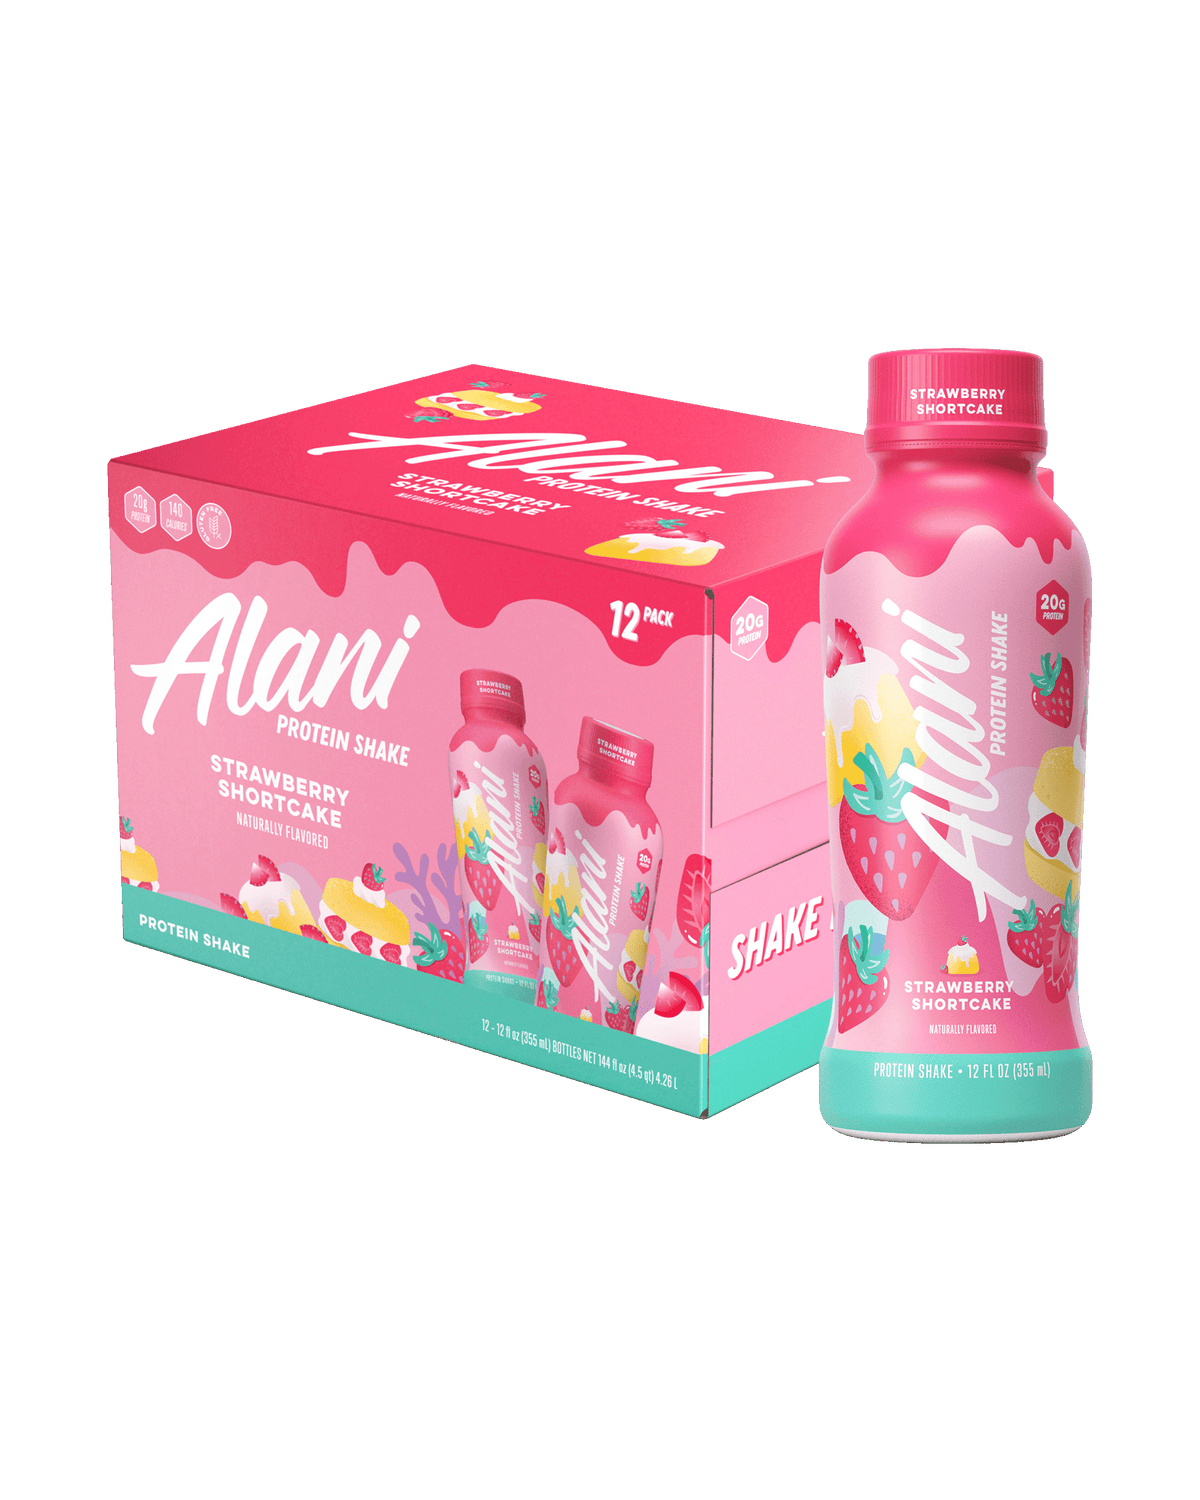 A bottle of Alani Nu Strawberry Shortcake Protein flavor Shake next to a 12pk box.